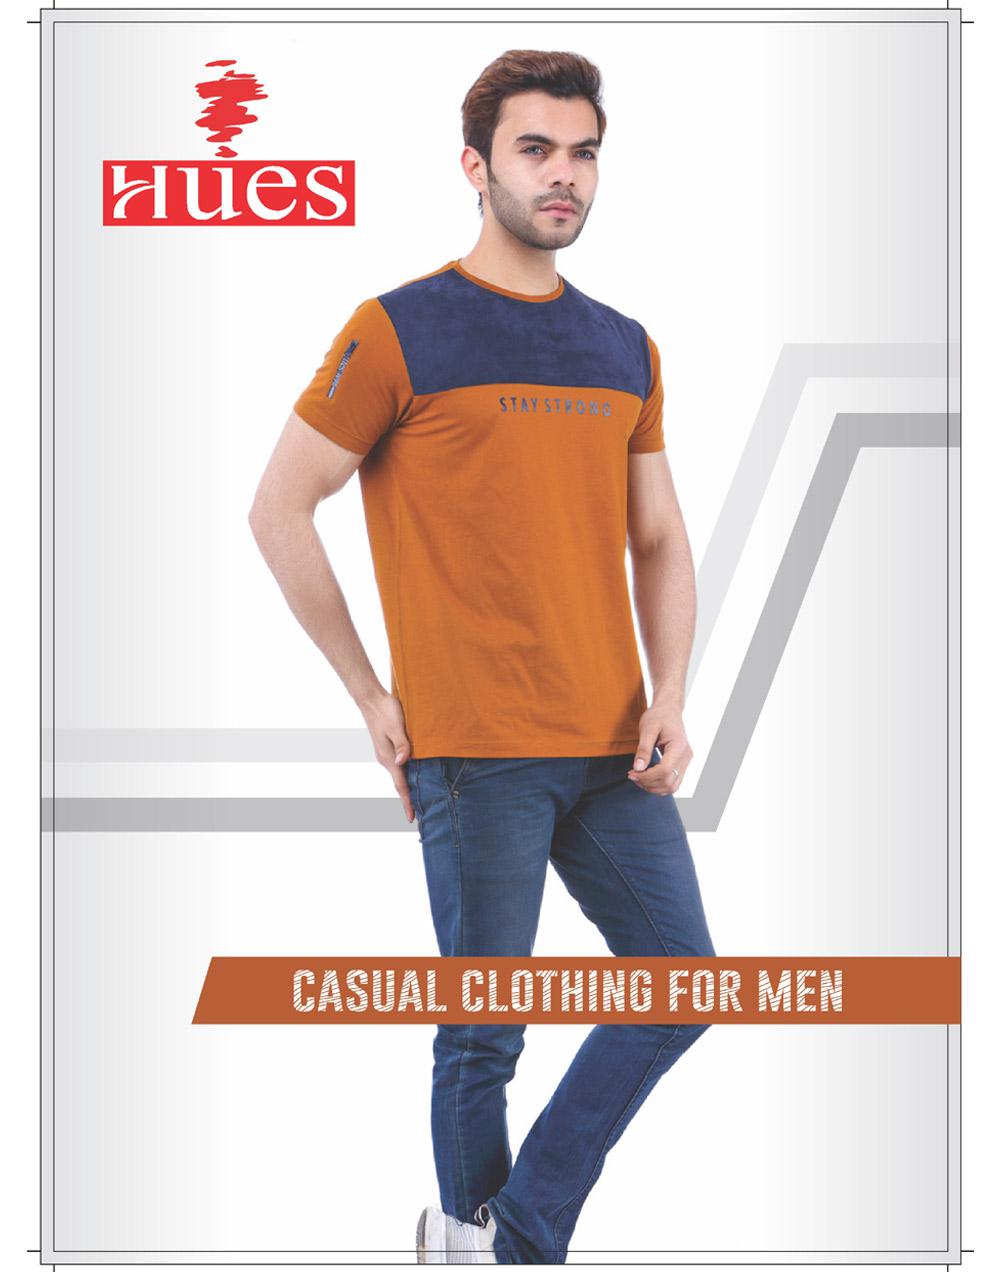 Hues Clothing Company P.Ltd